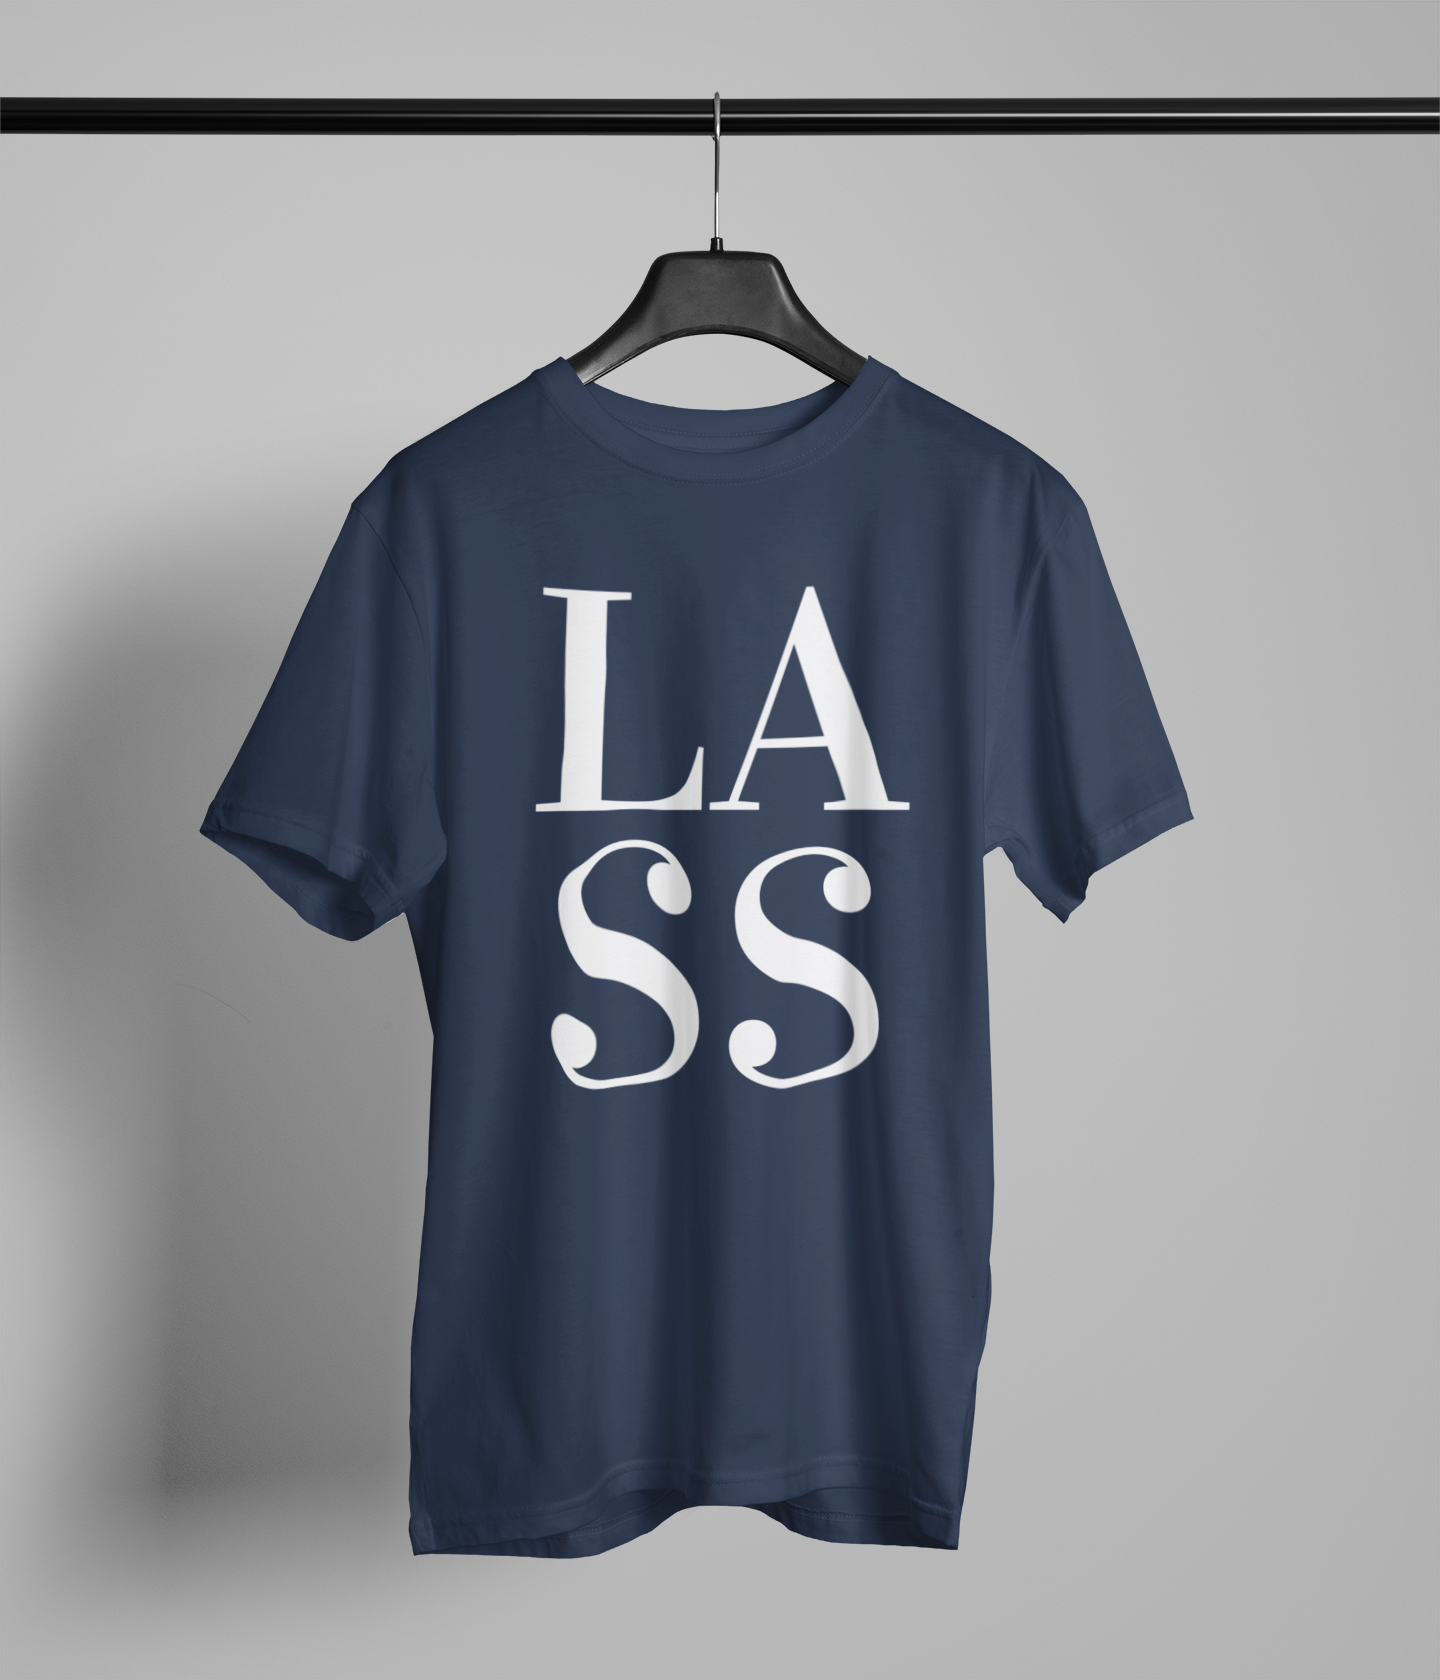 LASS Northern Slang T-Shirt Unisex